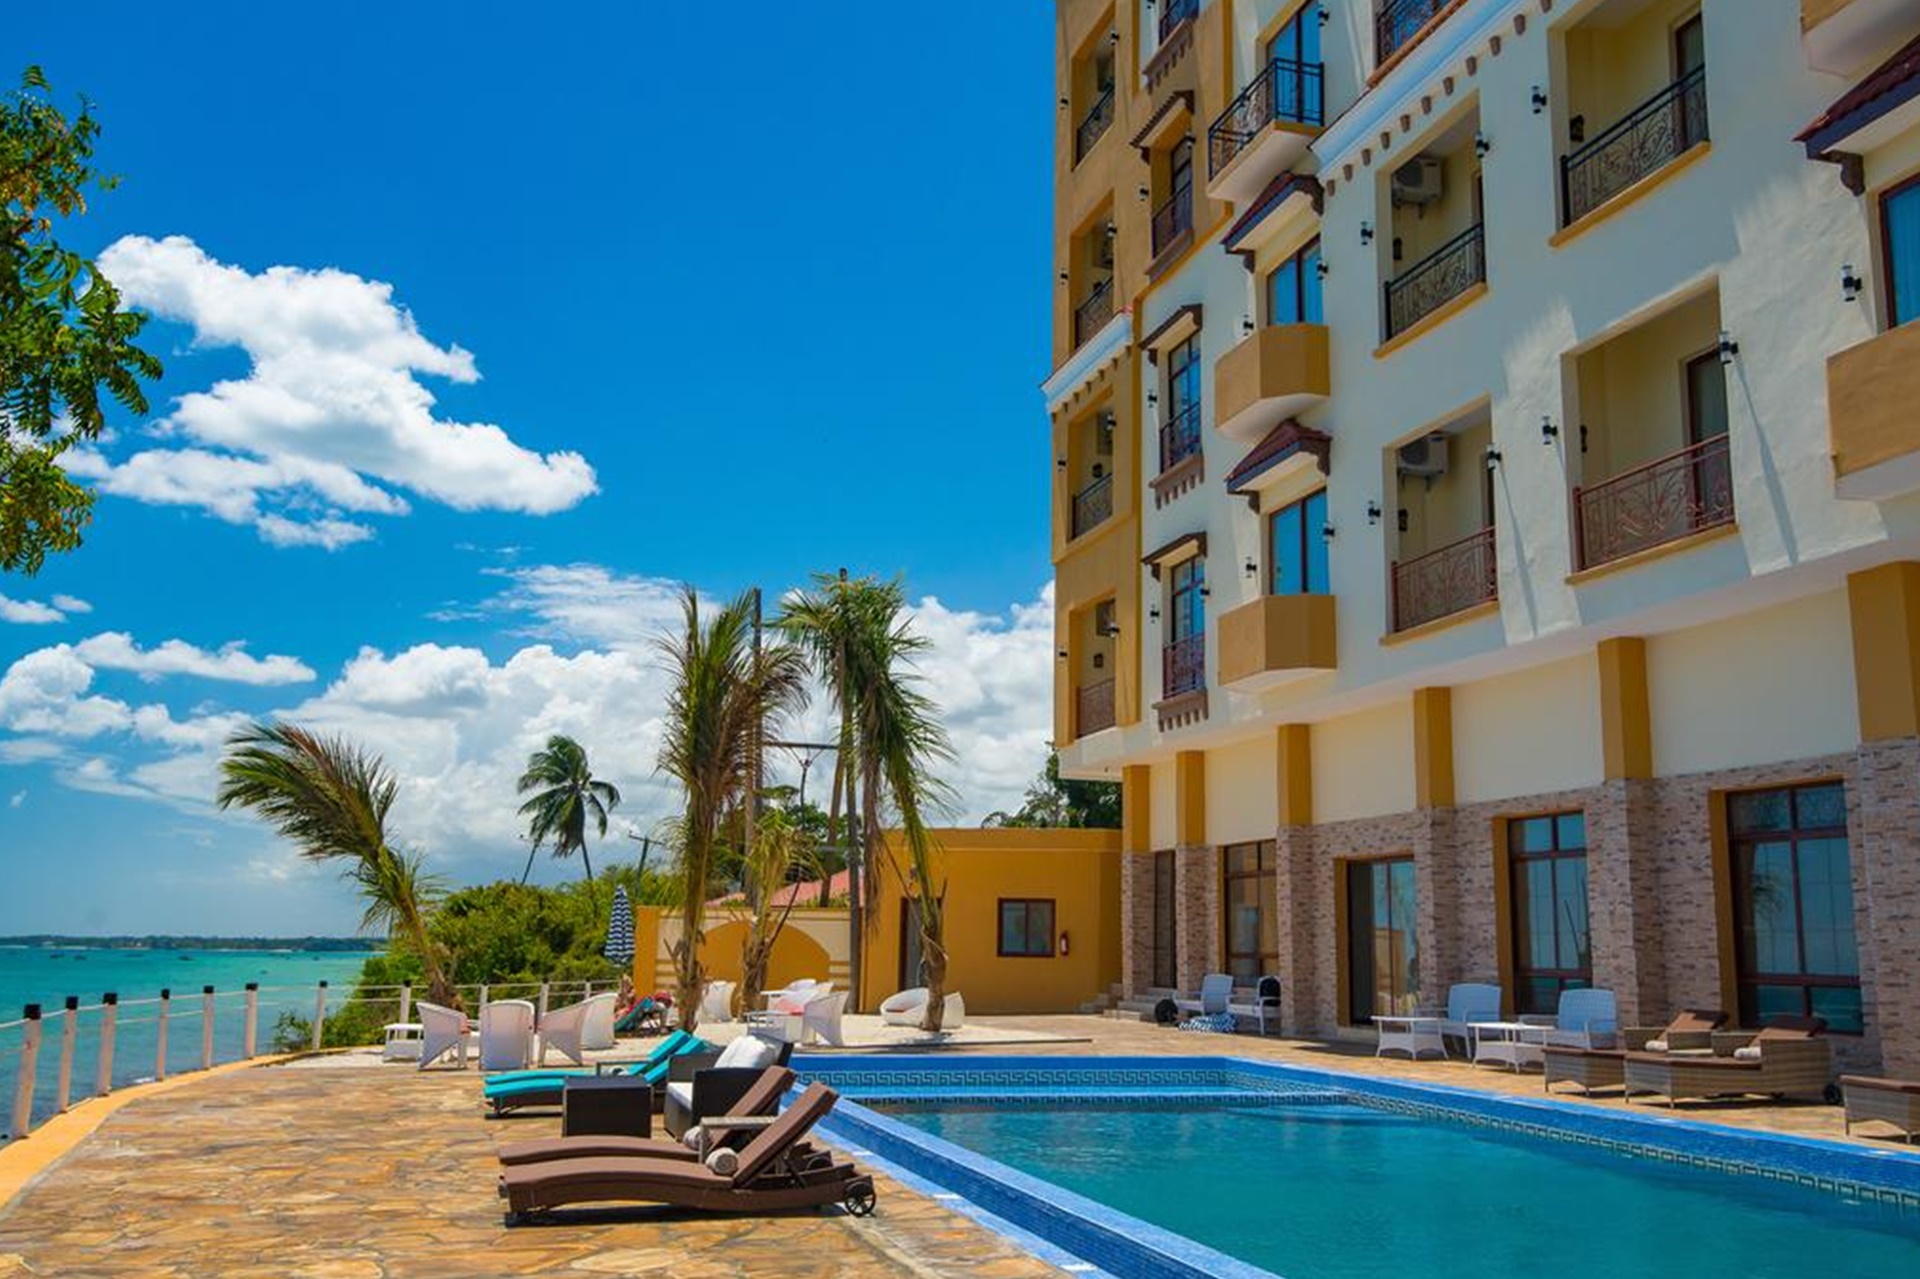 Golden Tulip Zanzibar Resort - Accommodation in Zanzibar